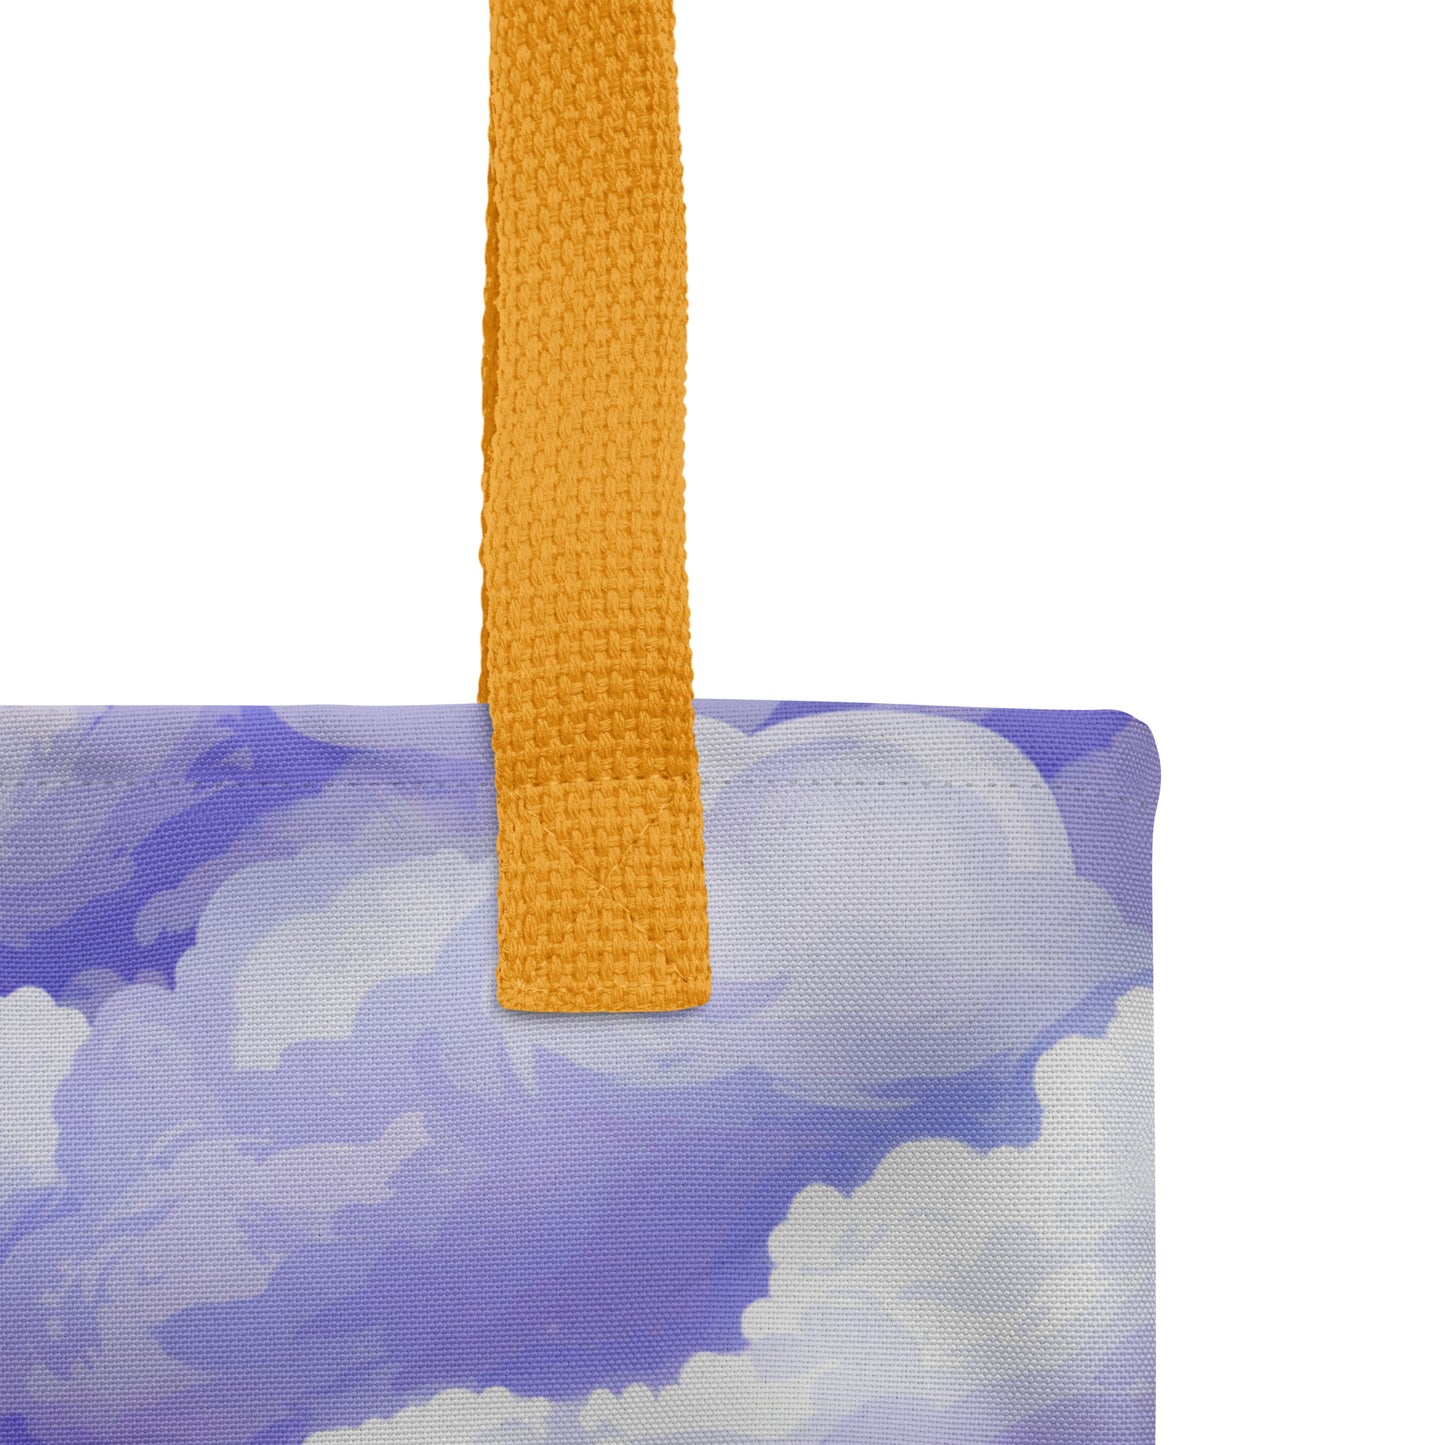 Purple Clouds Tote Bag